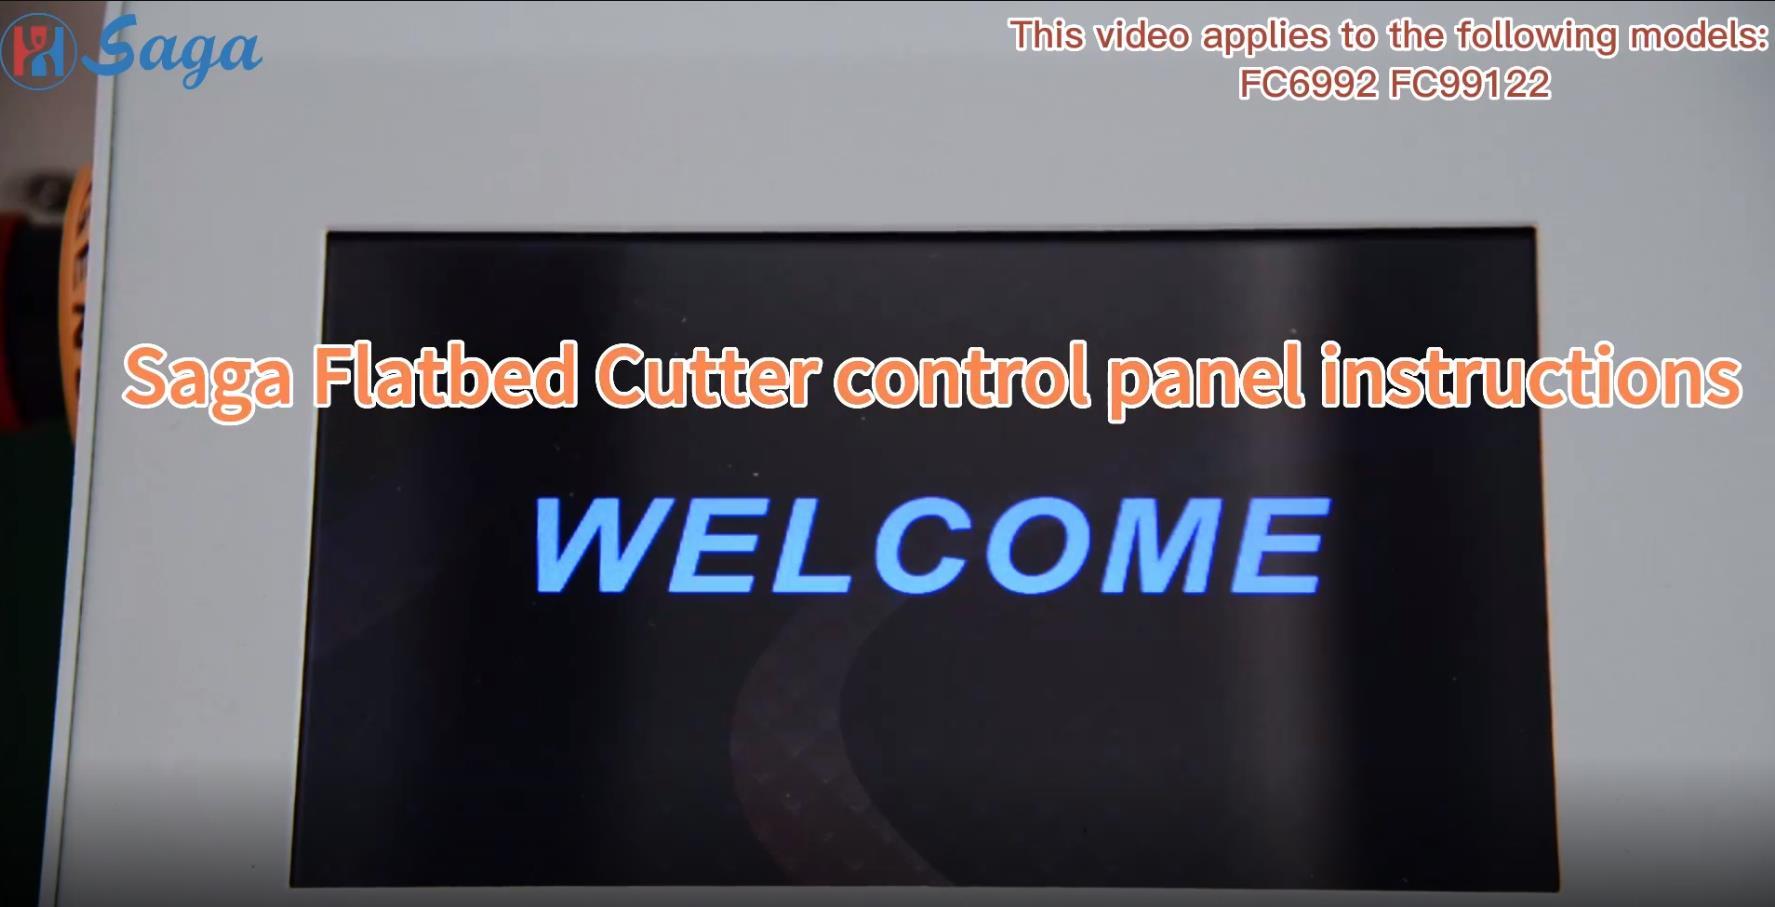 Saga Flatbed Cutter control panel instructions